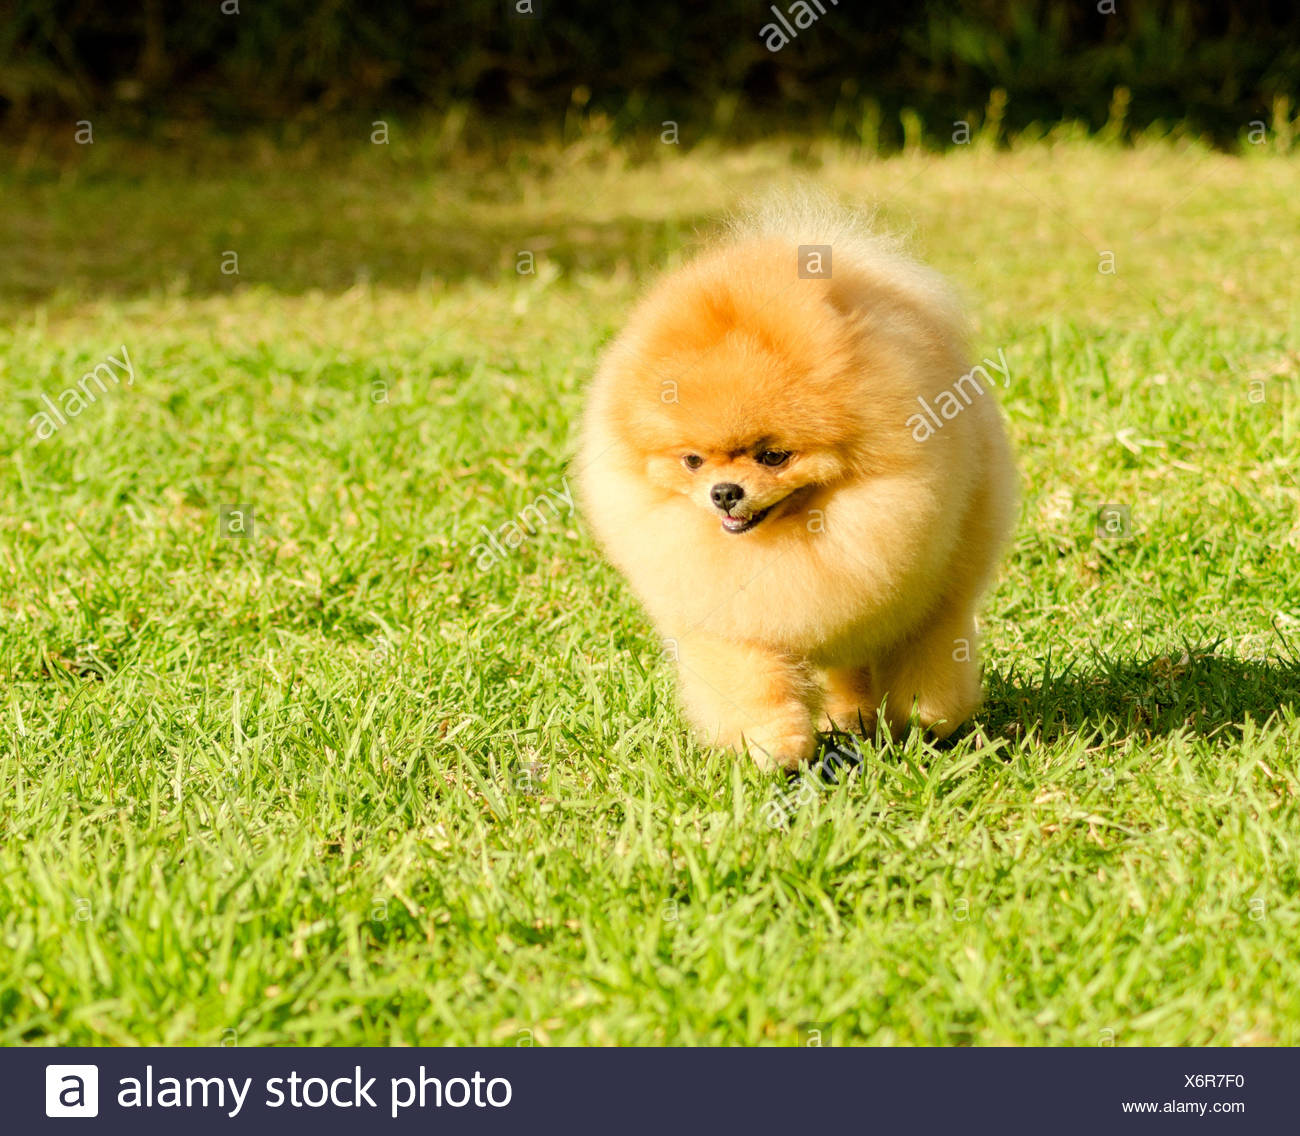 small orange dog